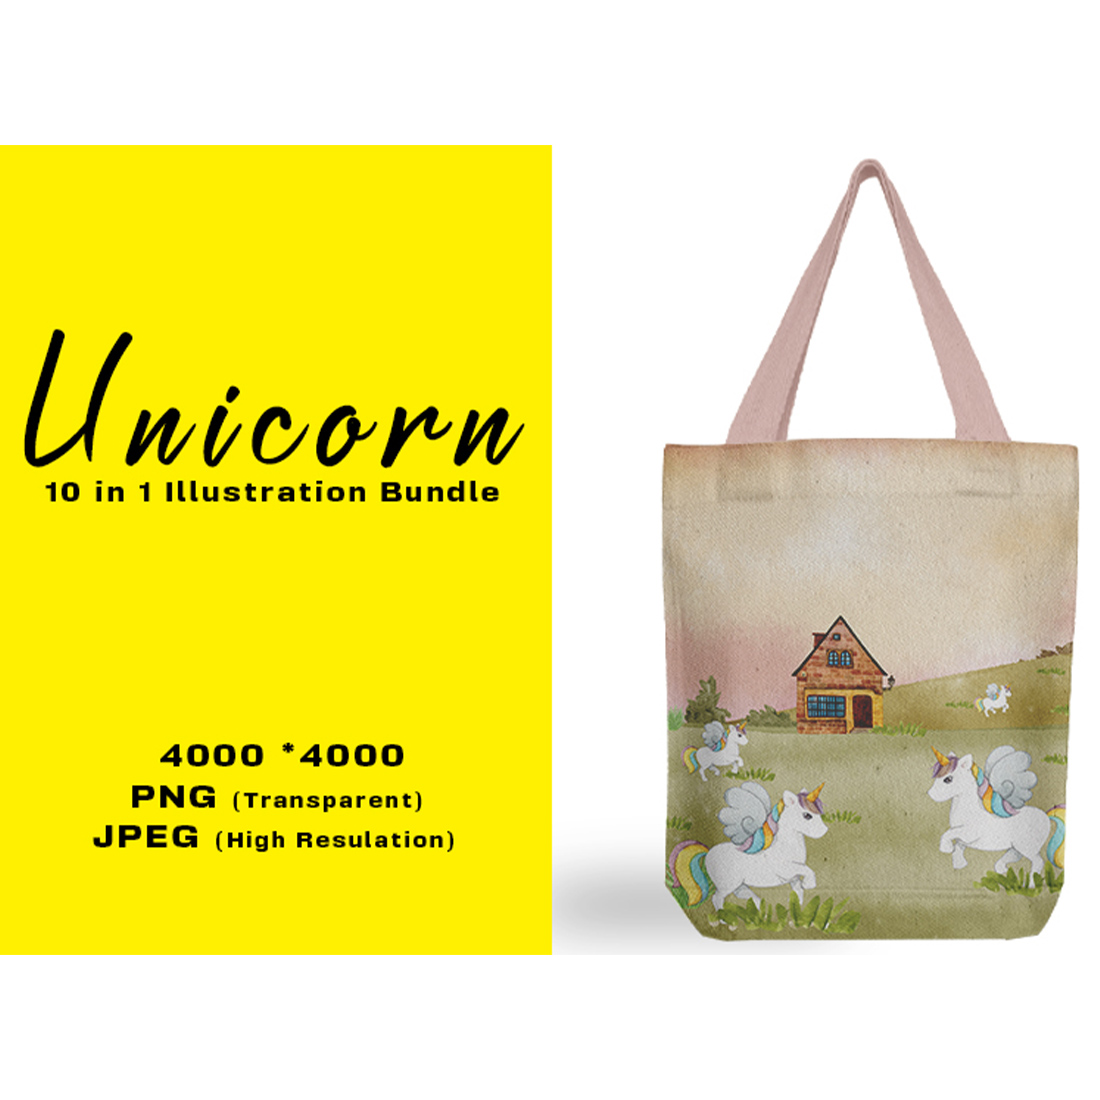 Image of bag with irresistible unicorn print